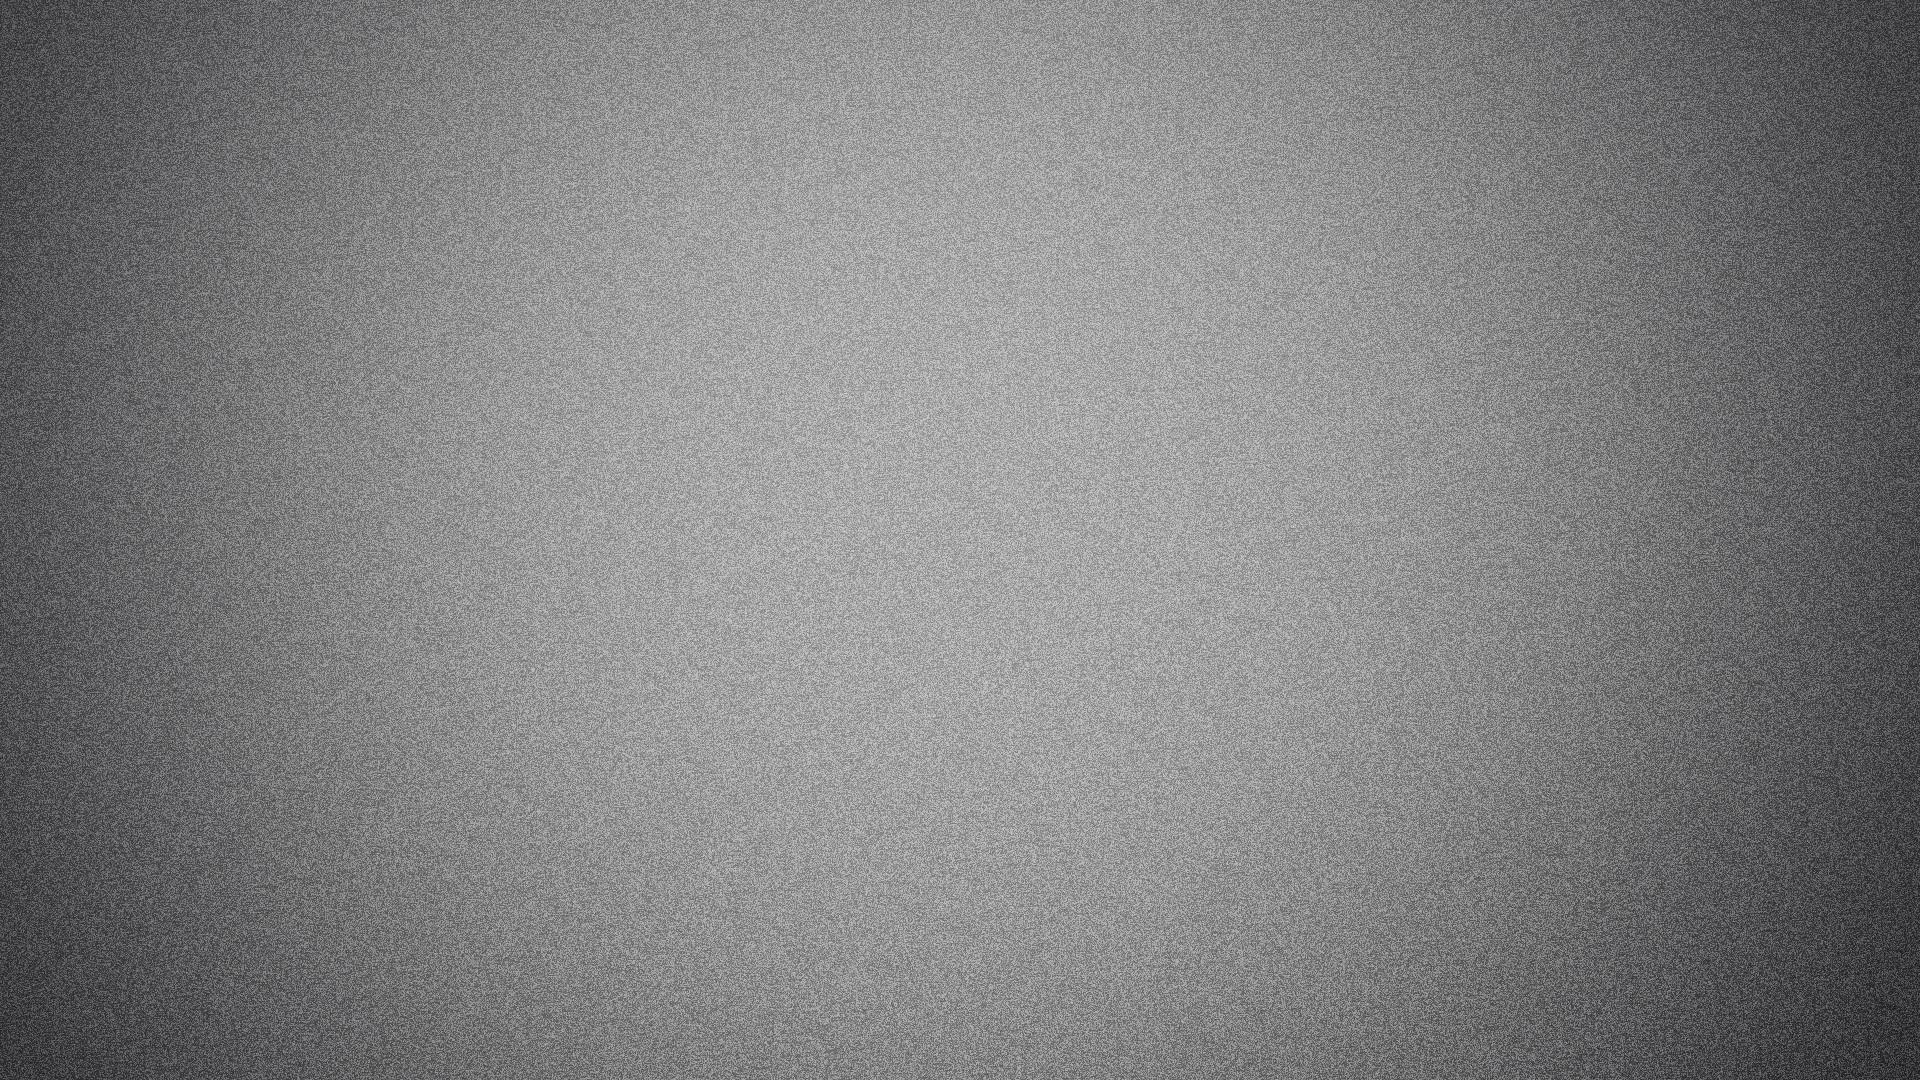 1920 x 1080 · jpeg - Grey Backgrounds free download | PixelsTalk